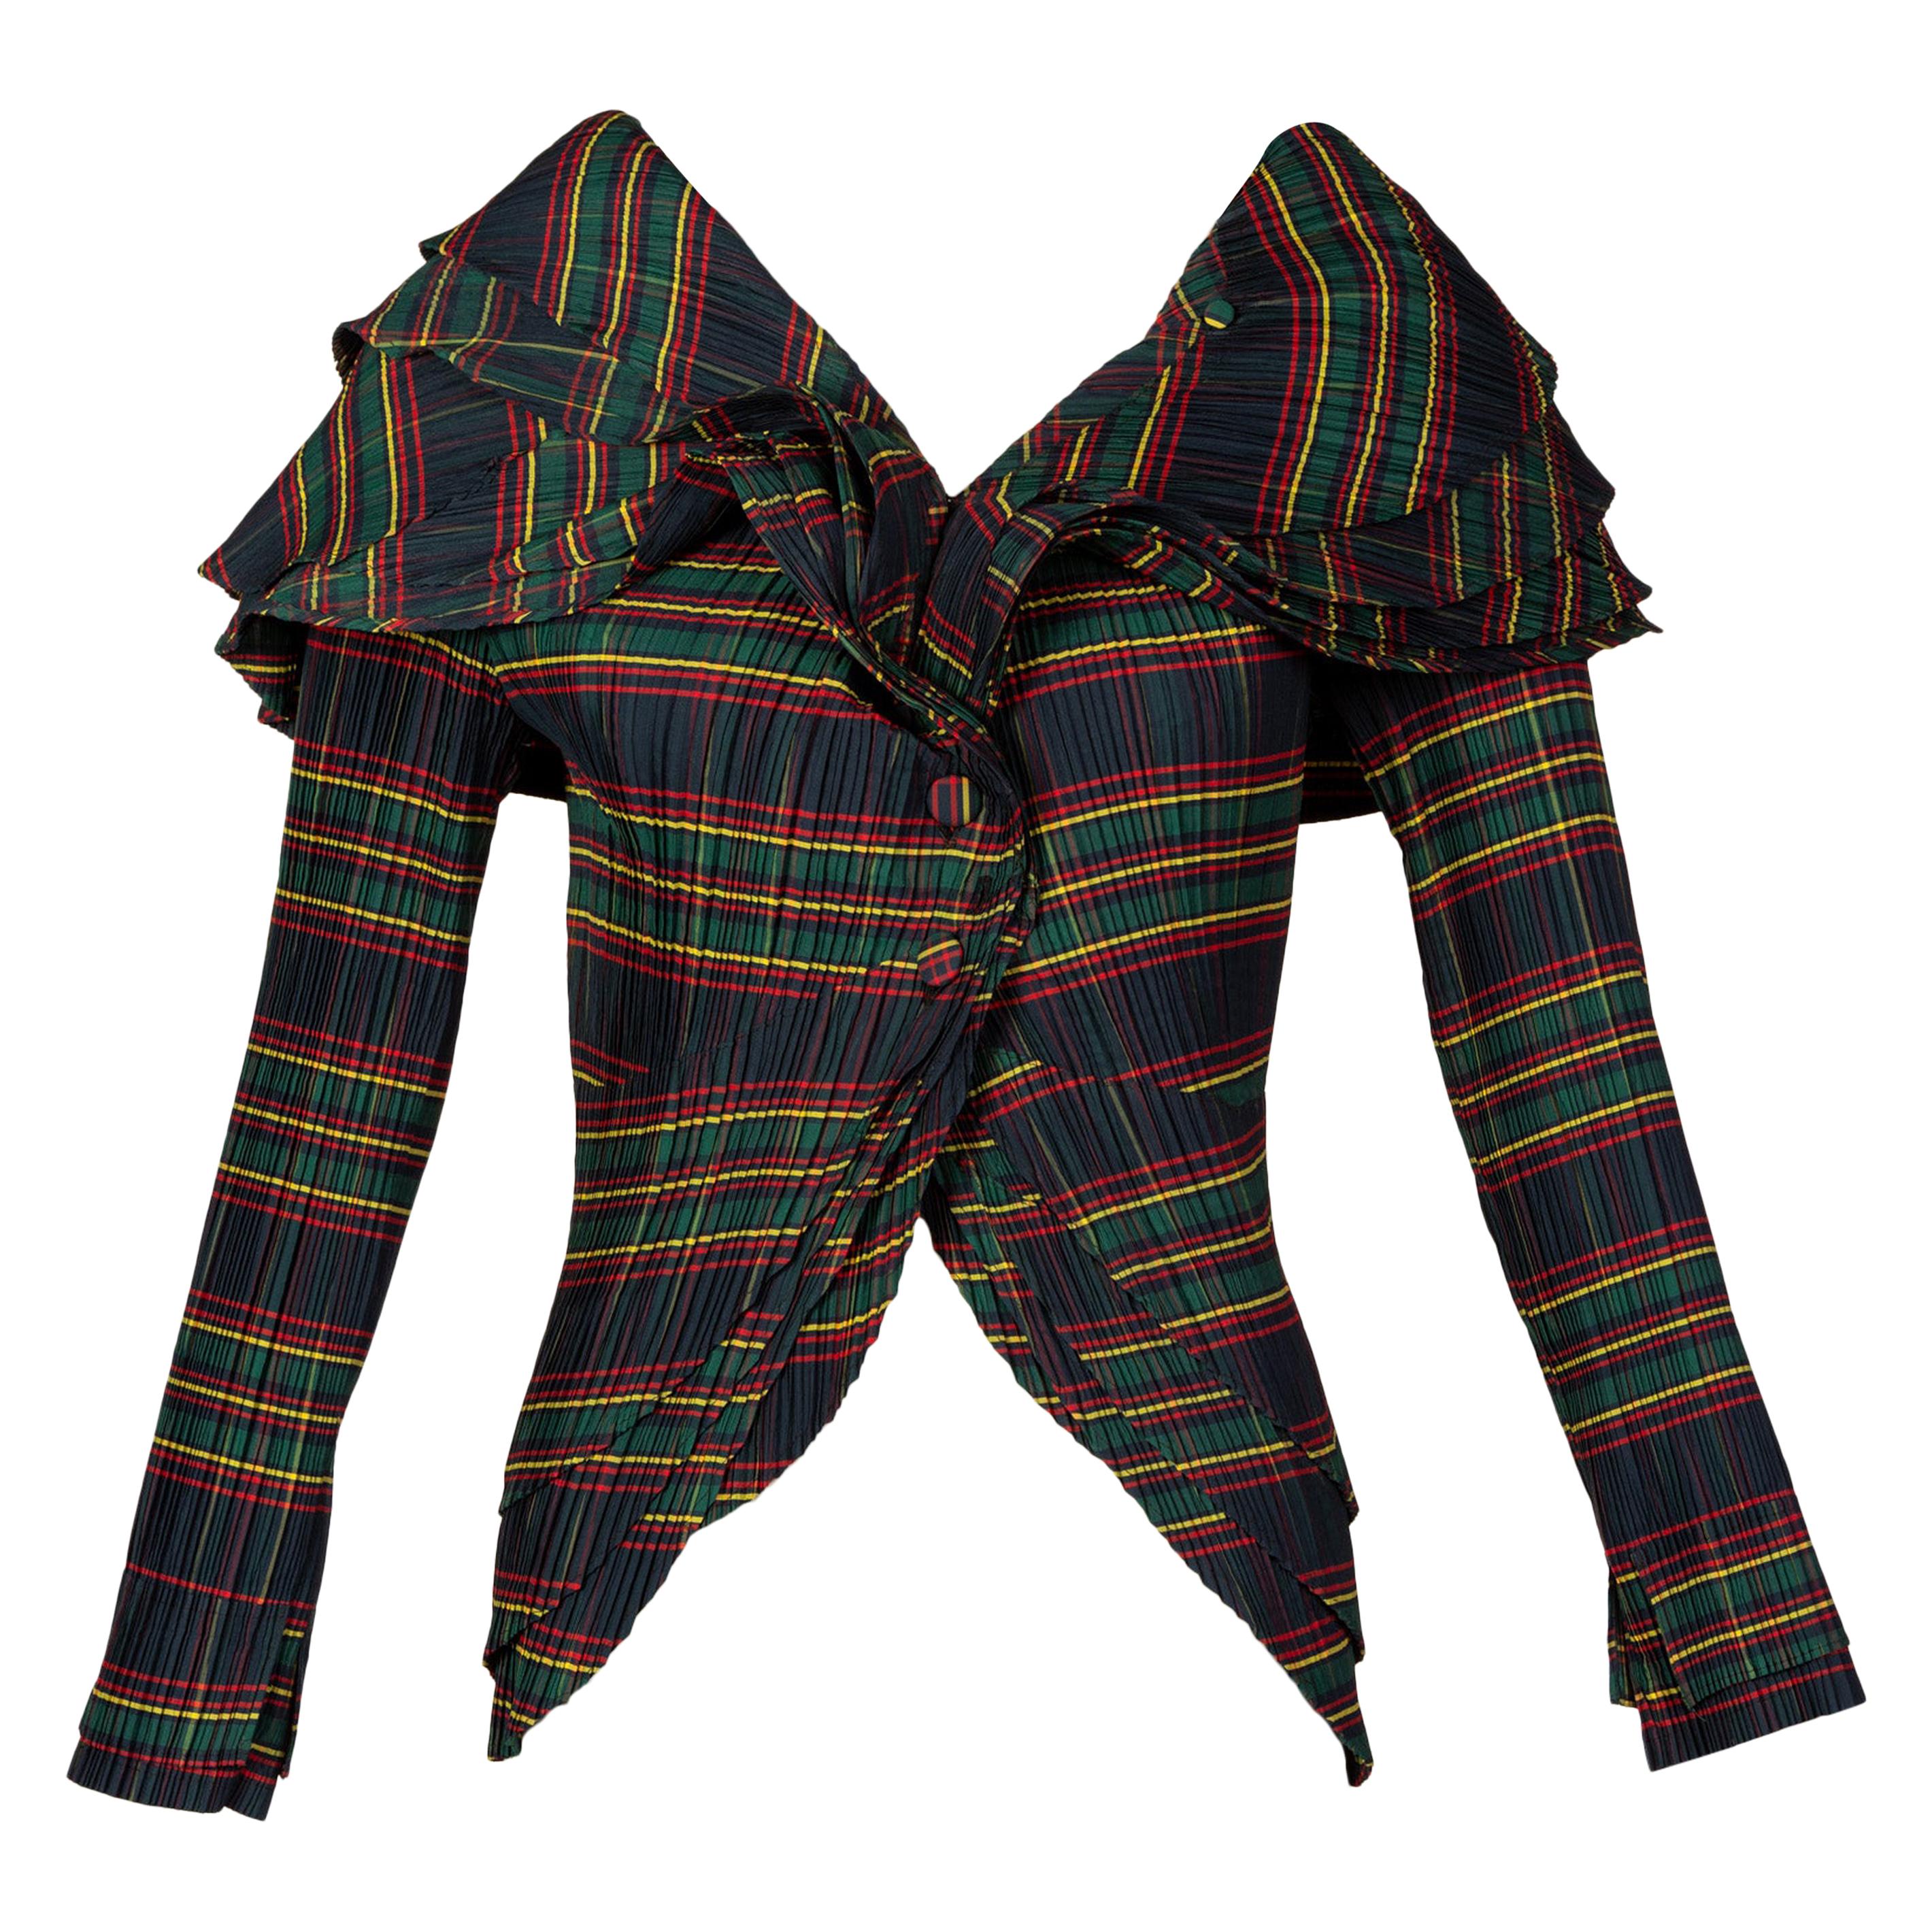 Mashiah Plisse Tartan Plaid Jacket Top Avant Garde For Sale